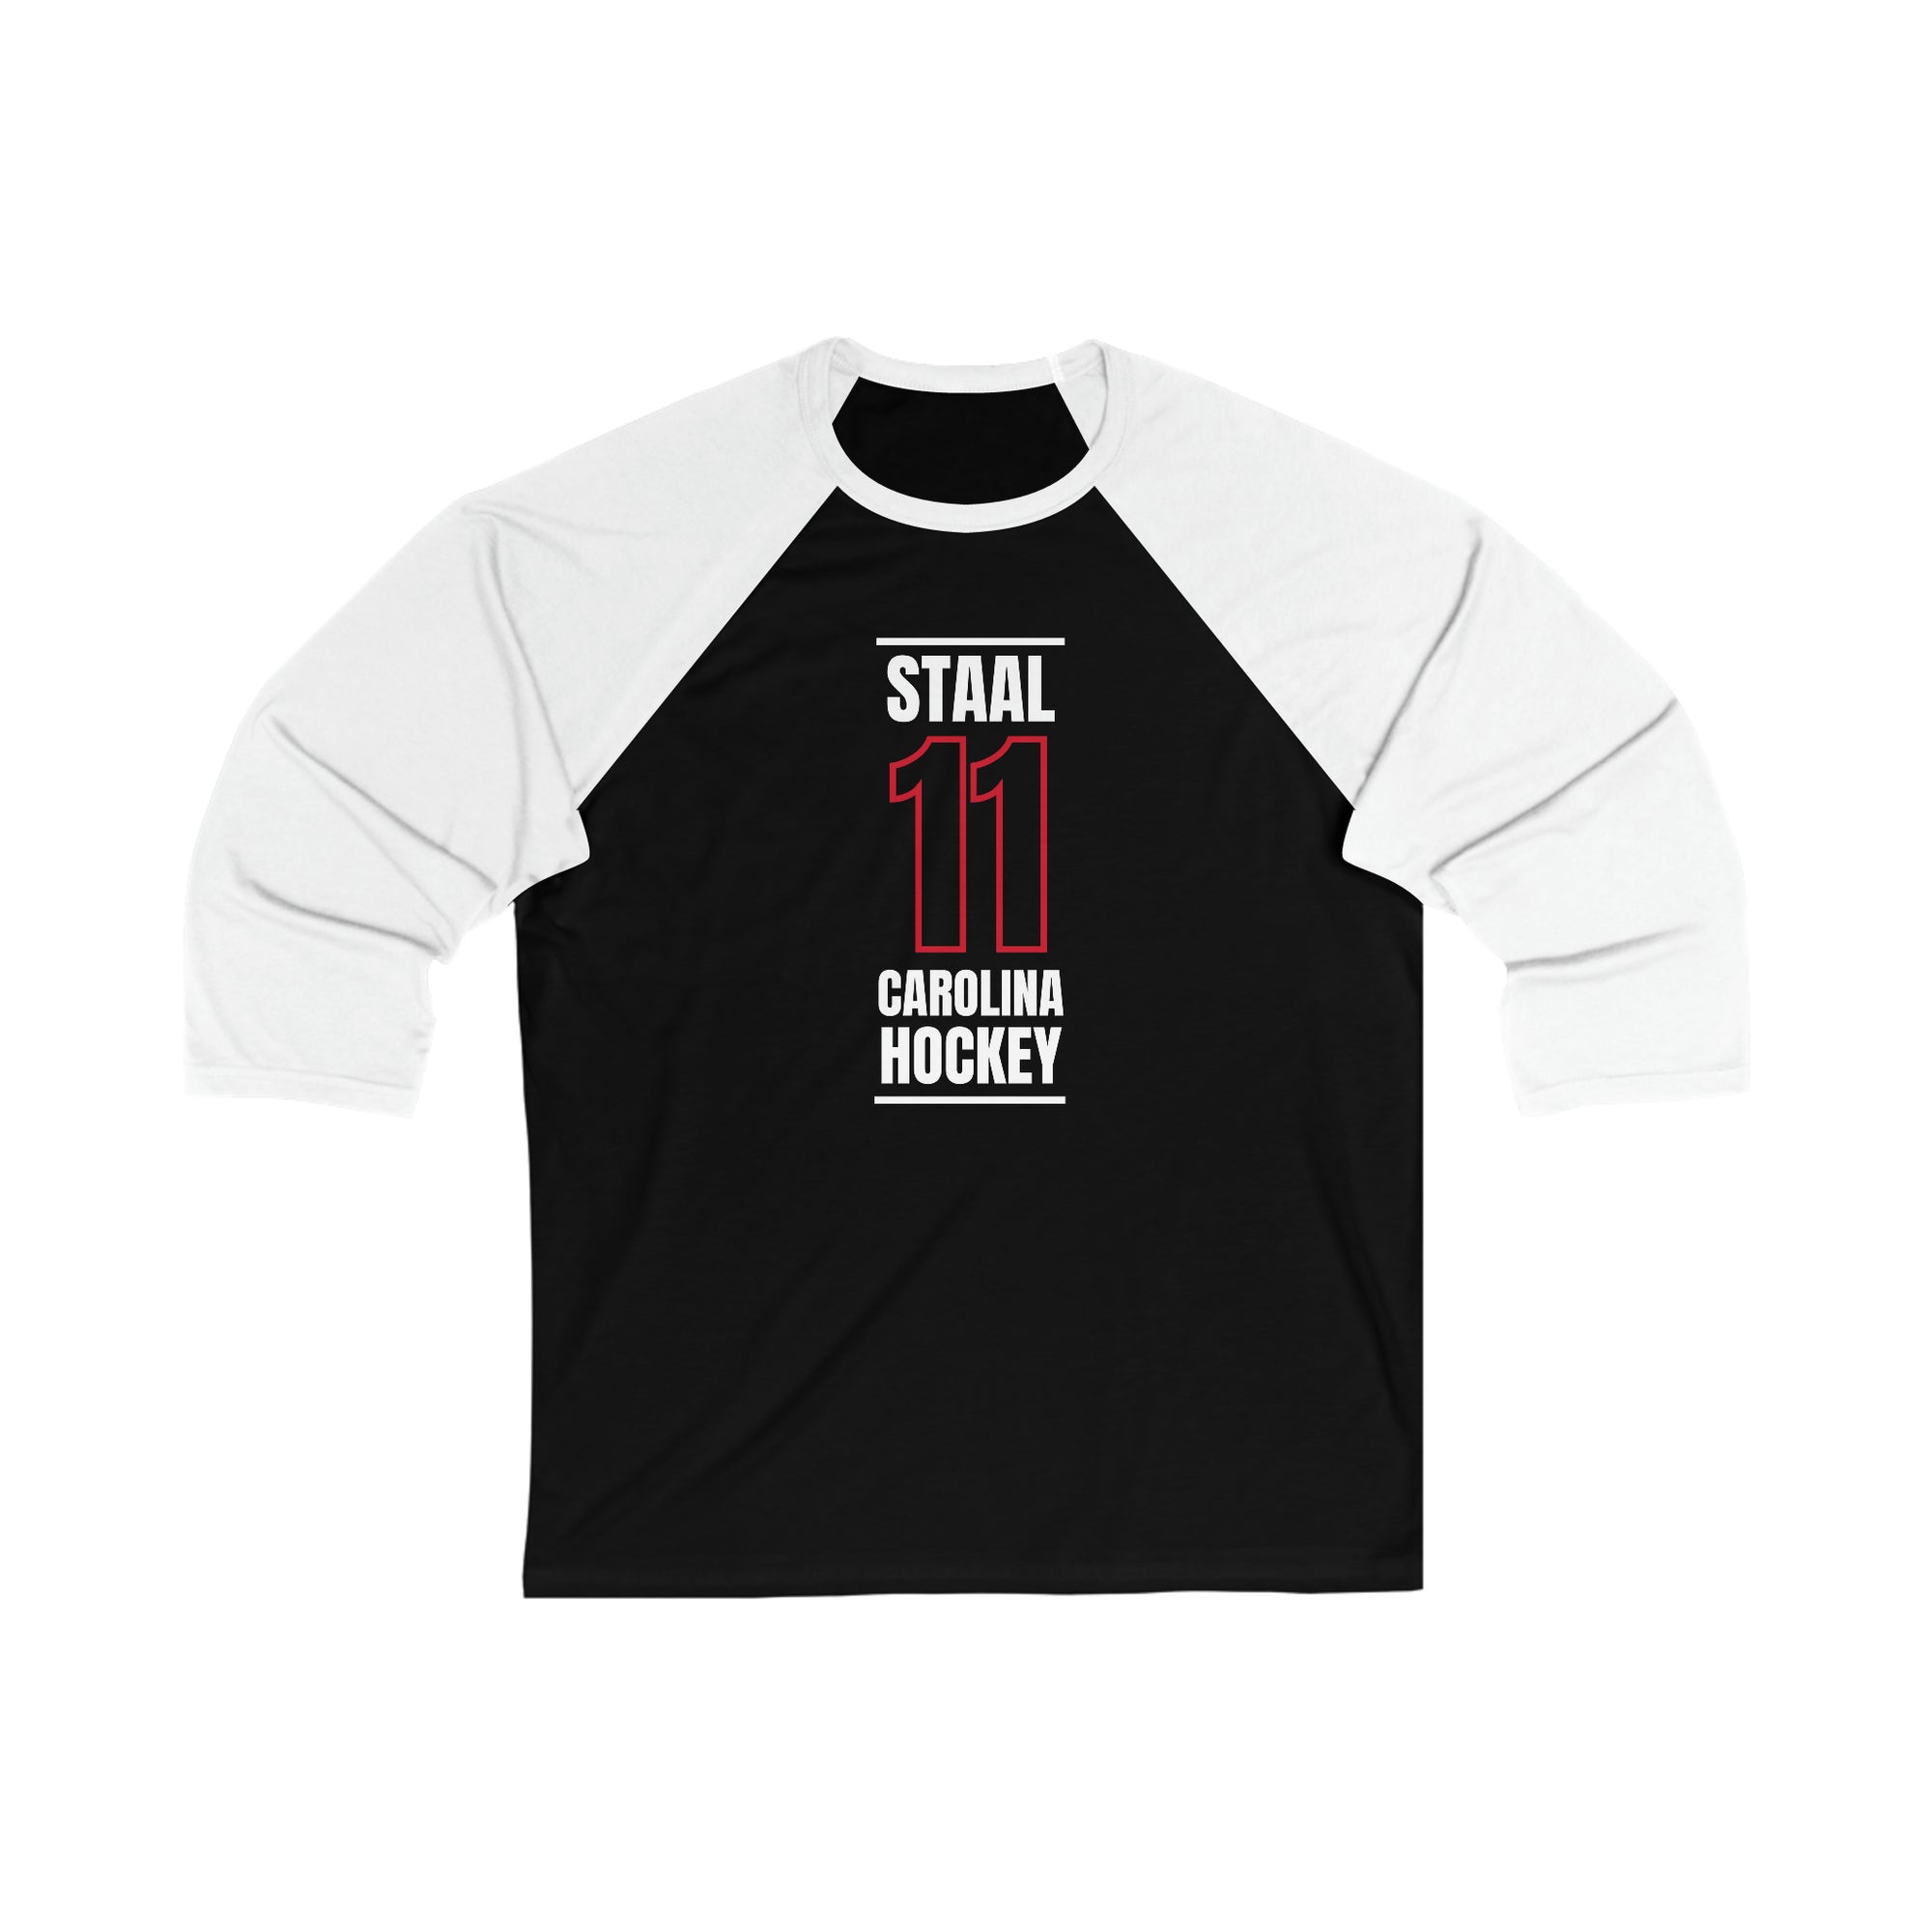 Staal 11 Carolina Hockey Black Vertical Design Unisex Tri-Blend 3/4 Sleeve Raglan Baseball Shirt